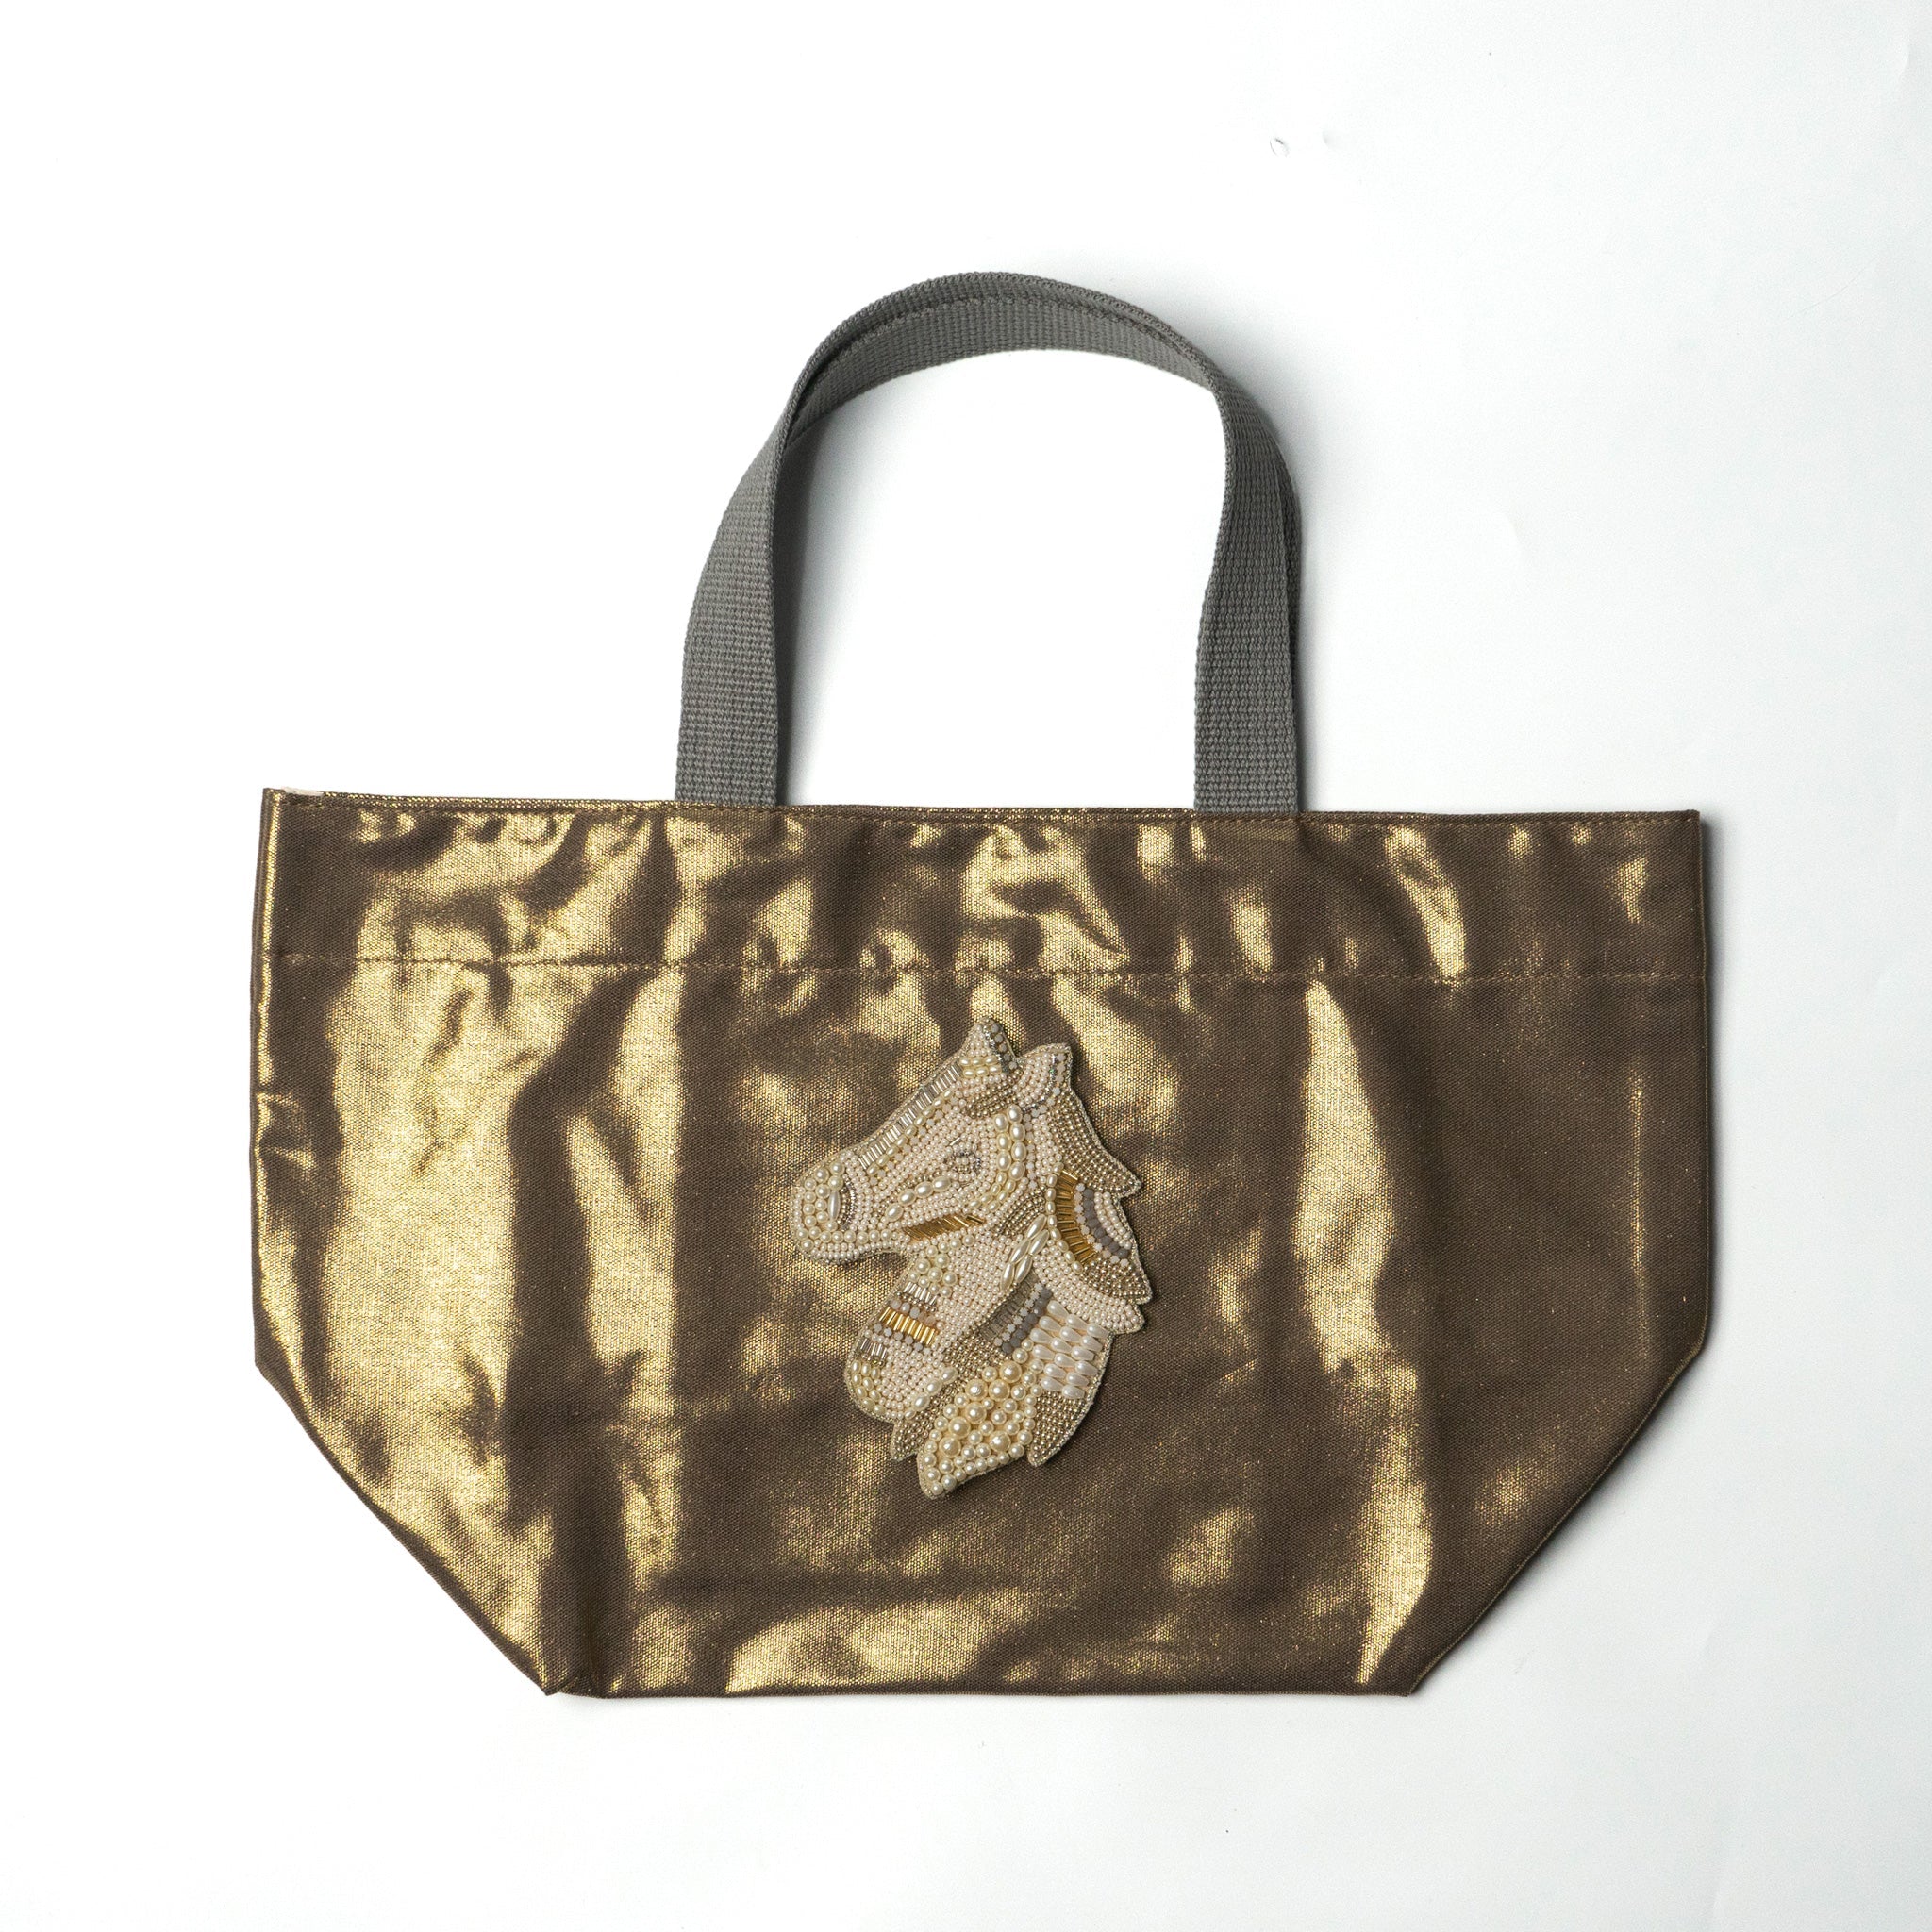 Metallic lunch bag (boat -shaped) / handle gray (selected motif)